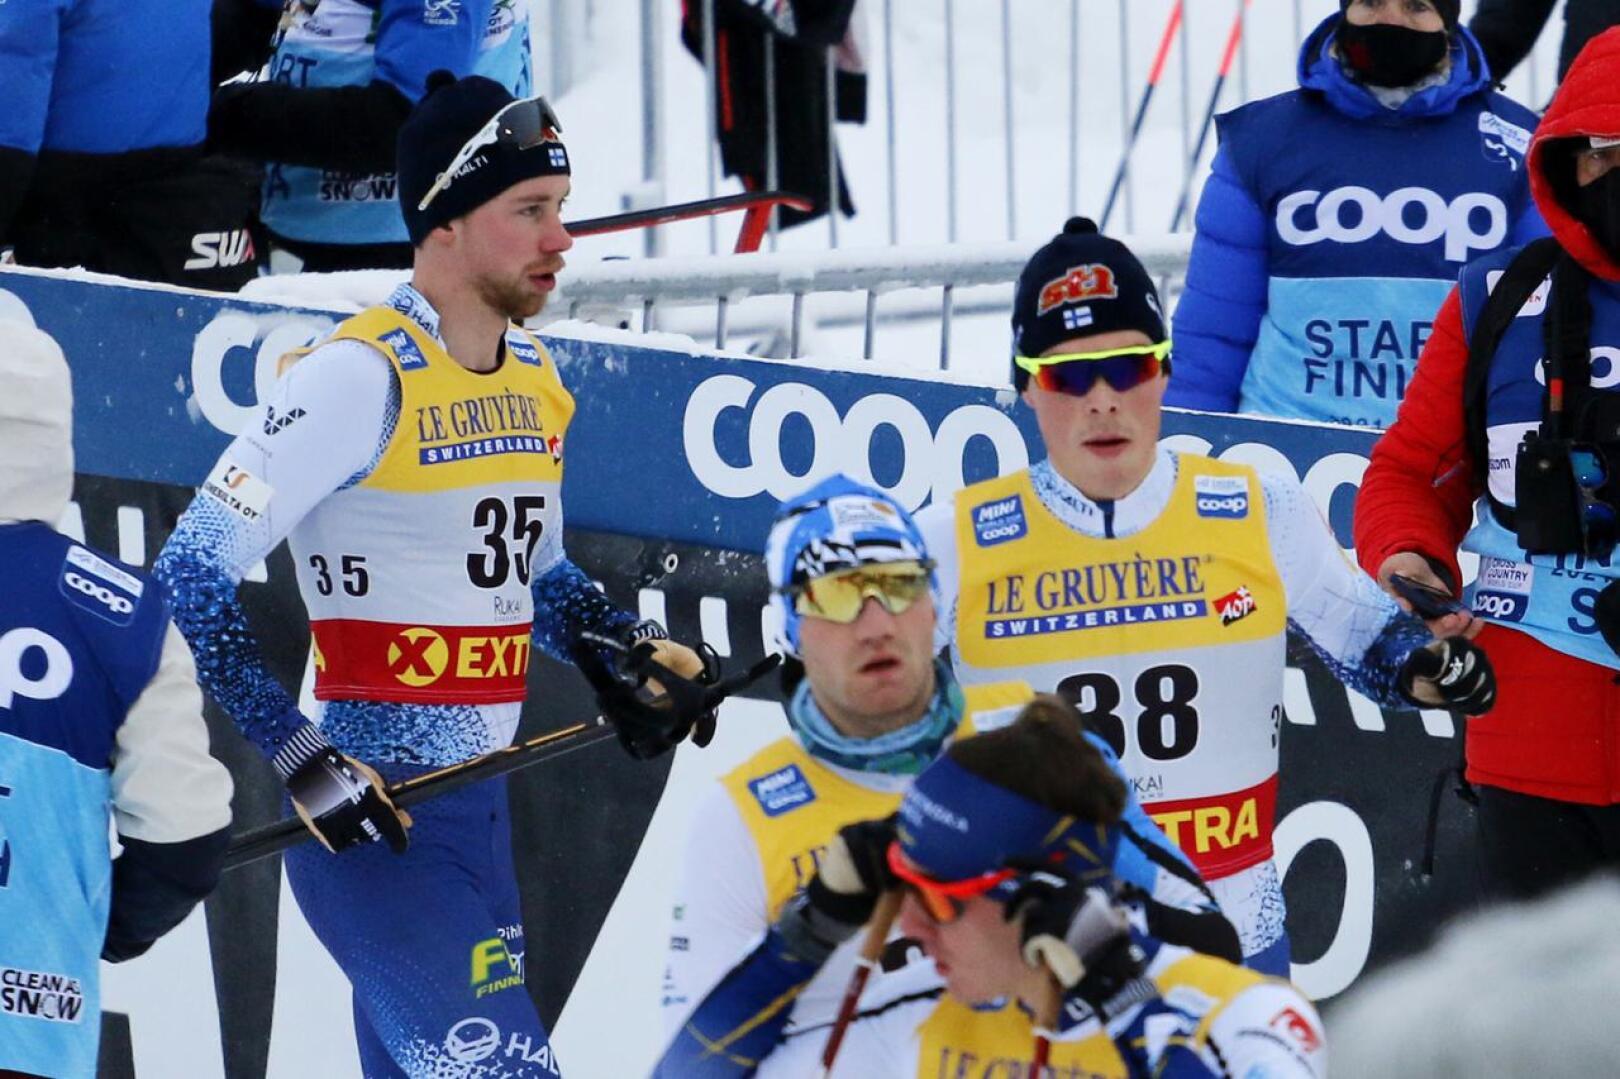 Pohti SkiTeamin Joni Mäki (35) ja Juuso Haarala (38) onnistuivat sprinttikarsinnassa. Mäki oli myöhemmin koko kisan kuudes.